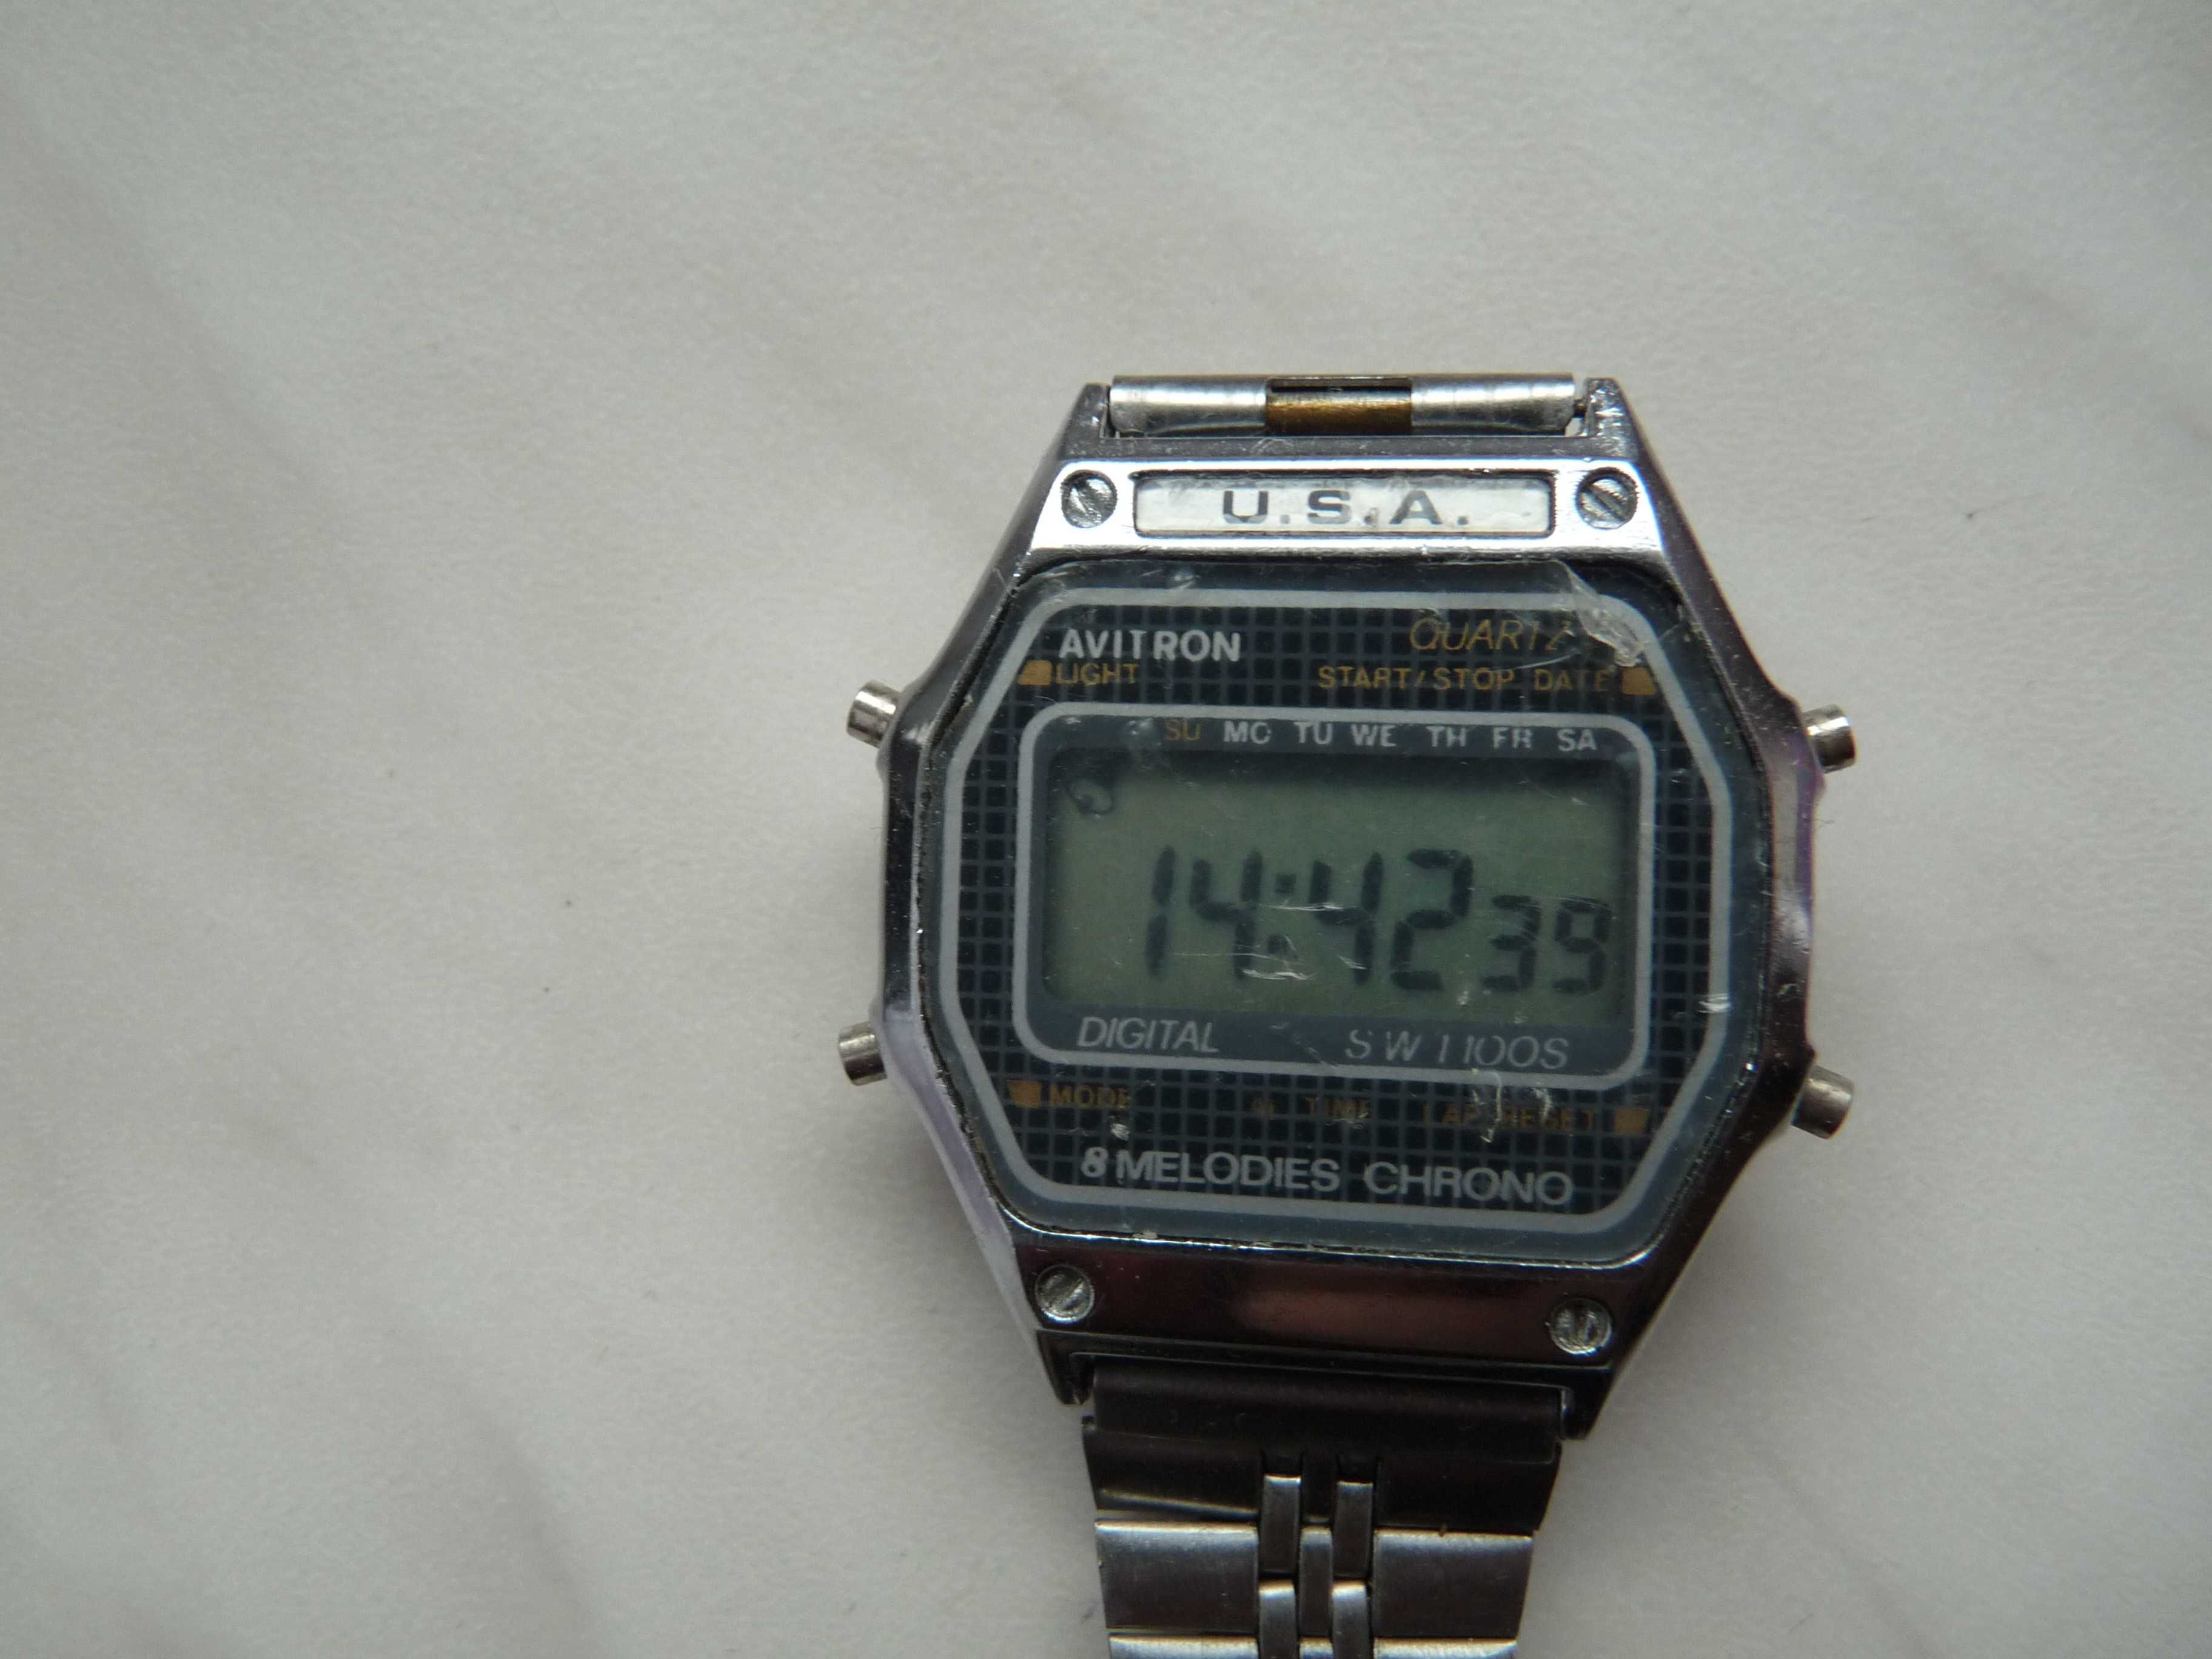 zegarek elektroniczny U.S.A. "Kessel "